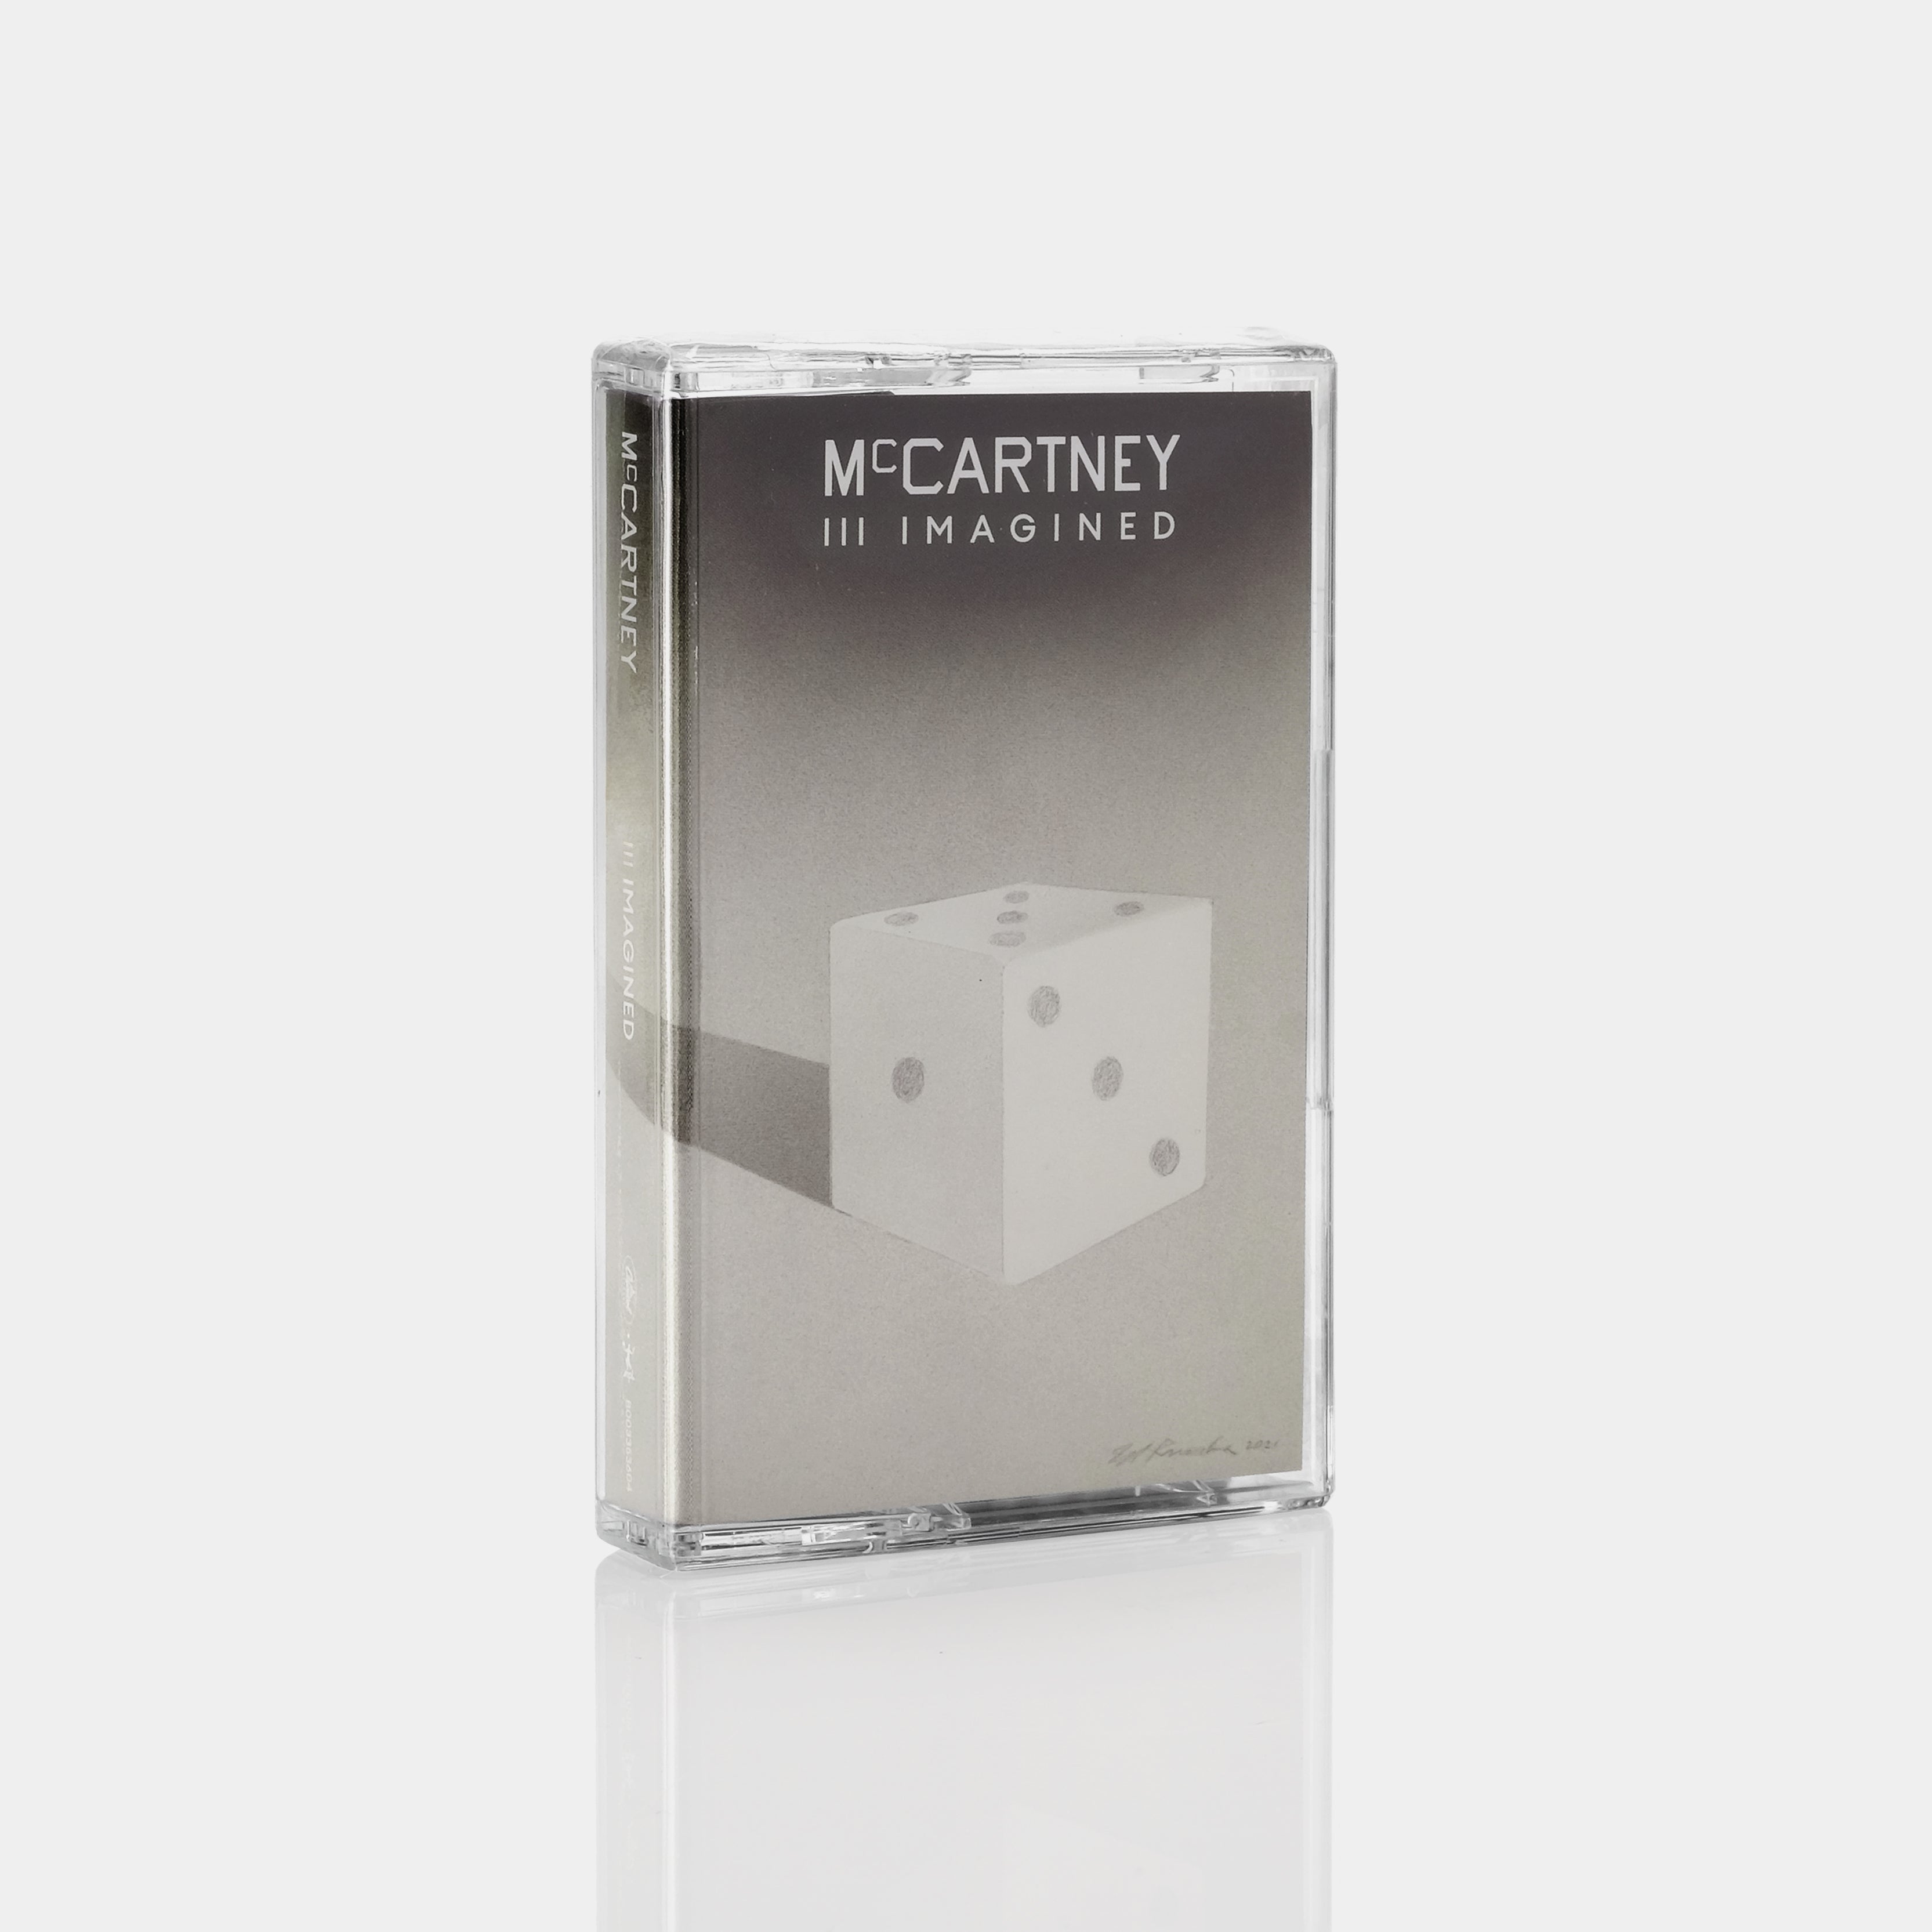 Paul McCartney - McCartney III Imagined Cassette Tape